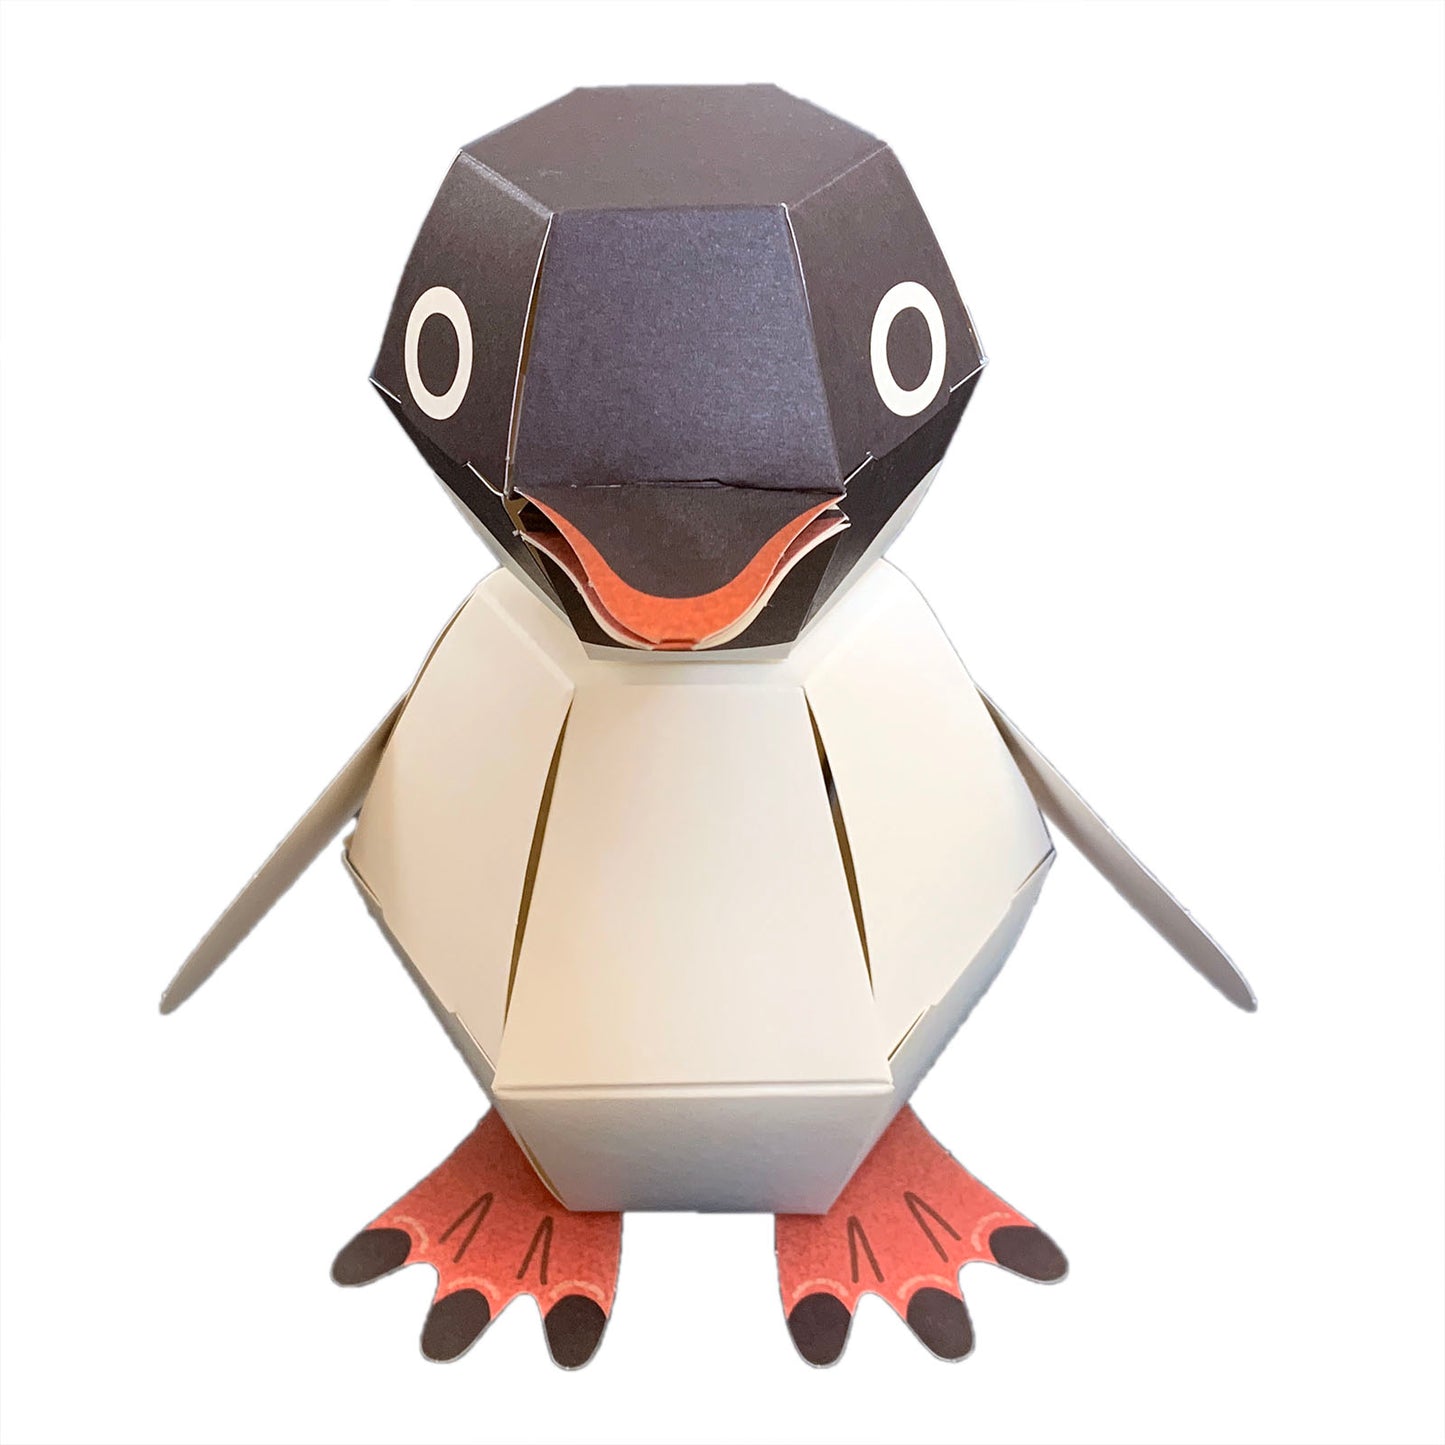 Poppin penguin when it bounces into shape